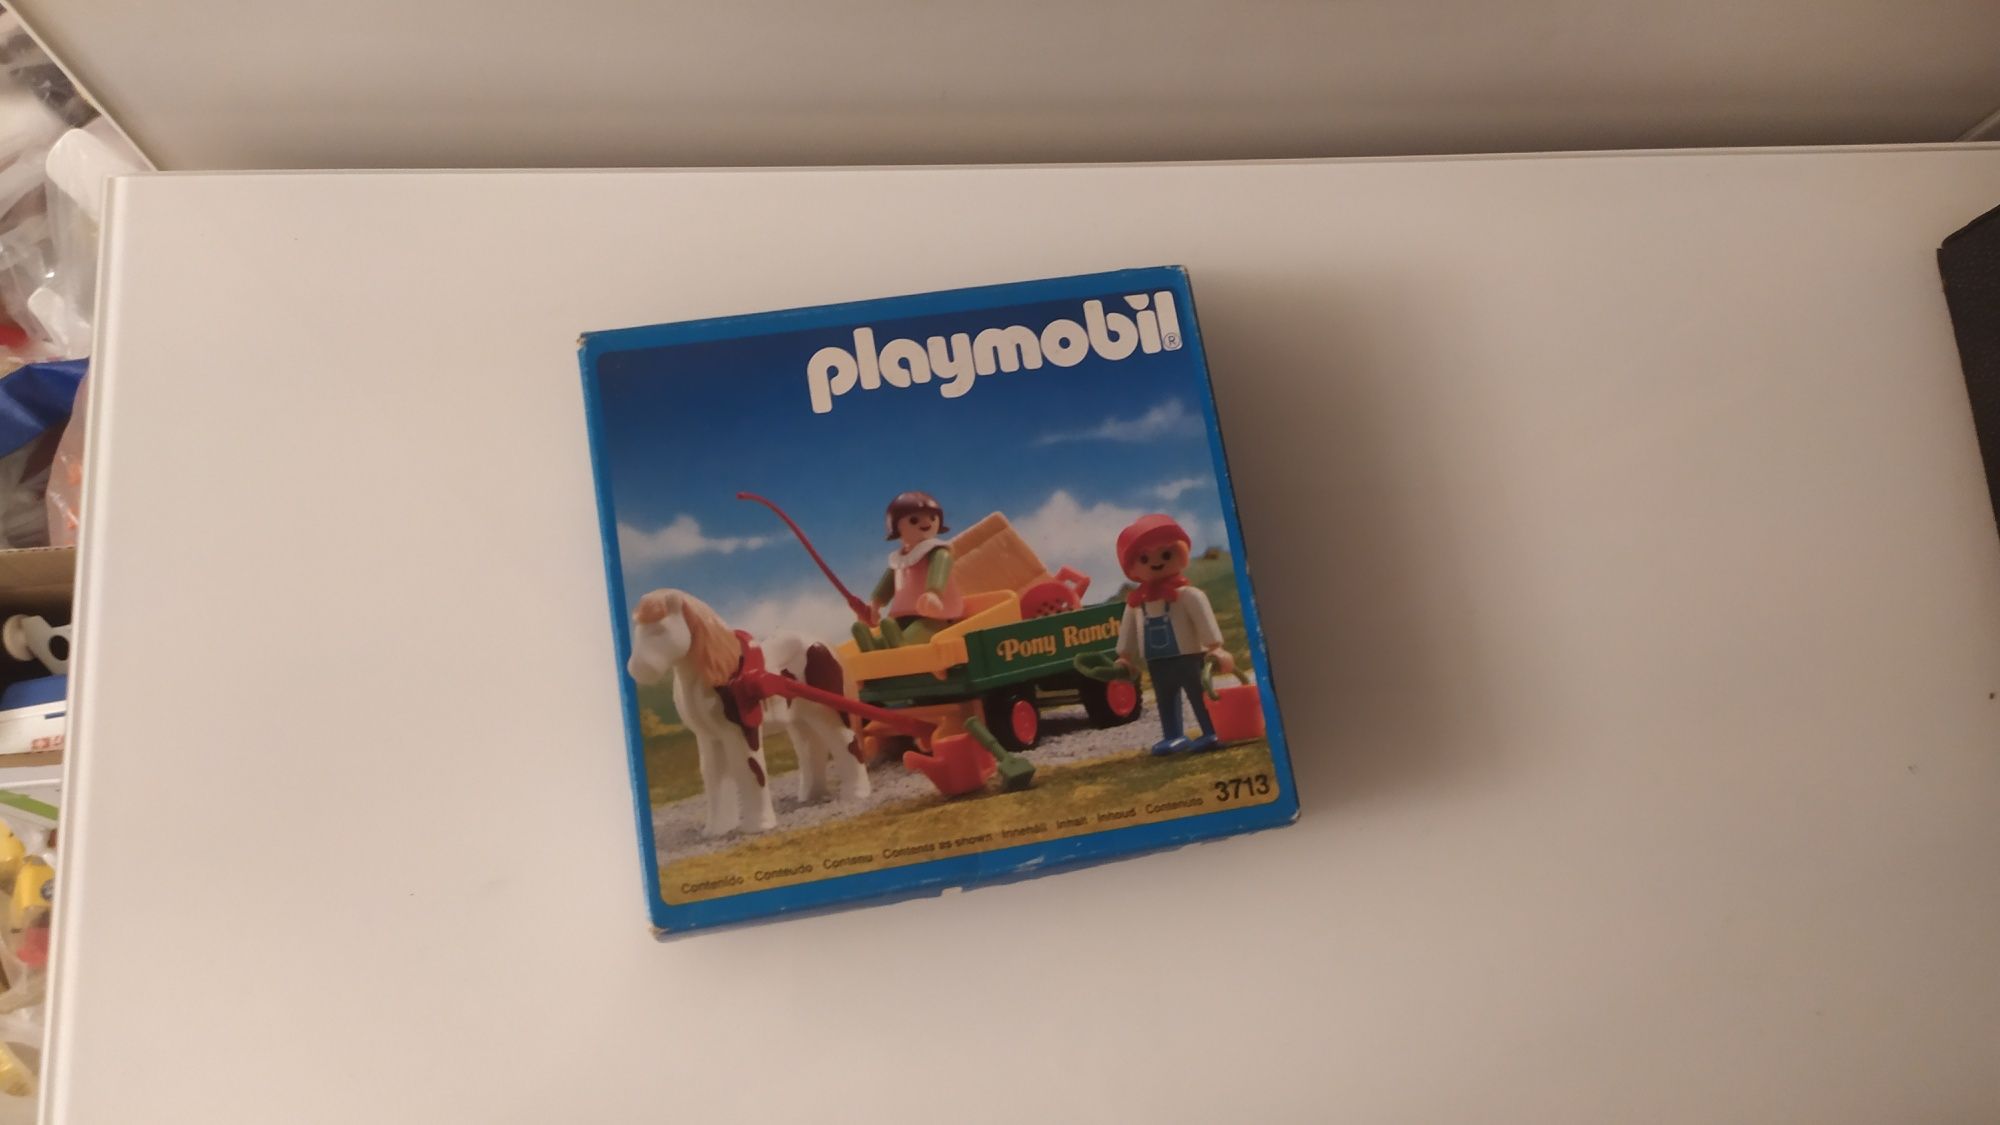 Playmobil set 3713